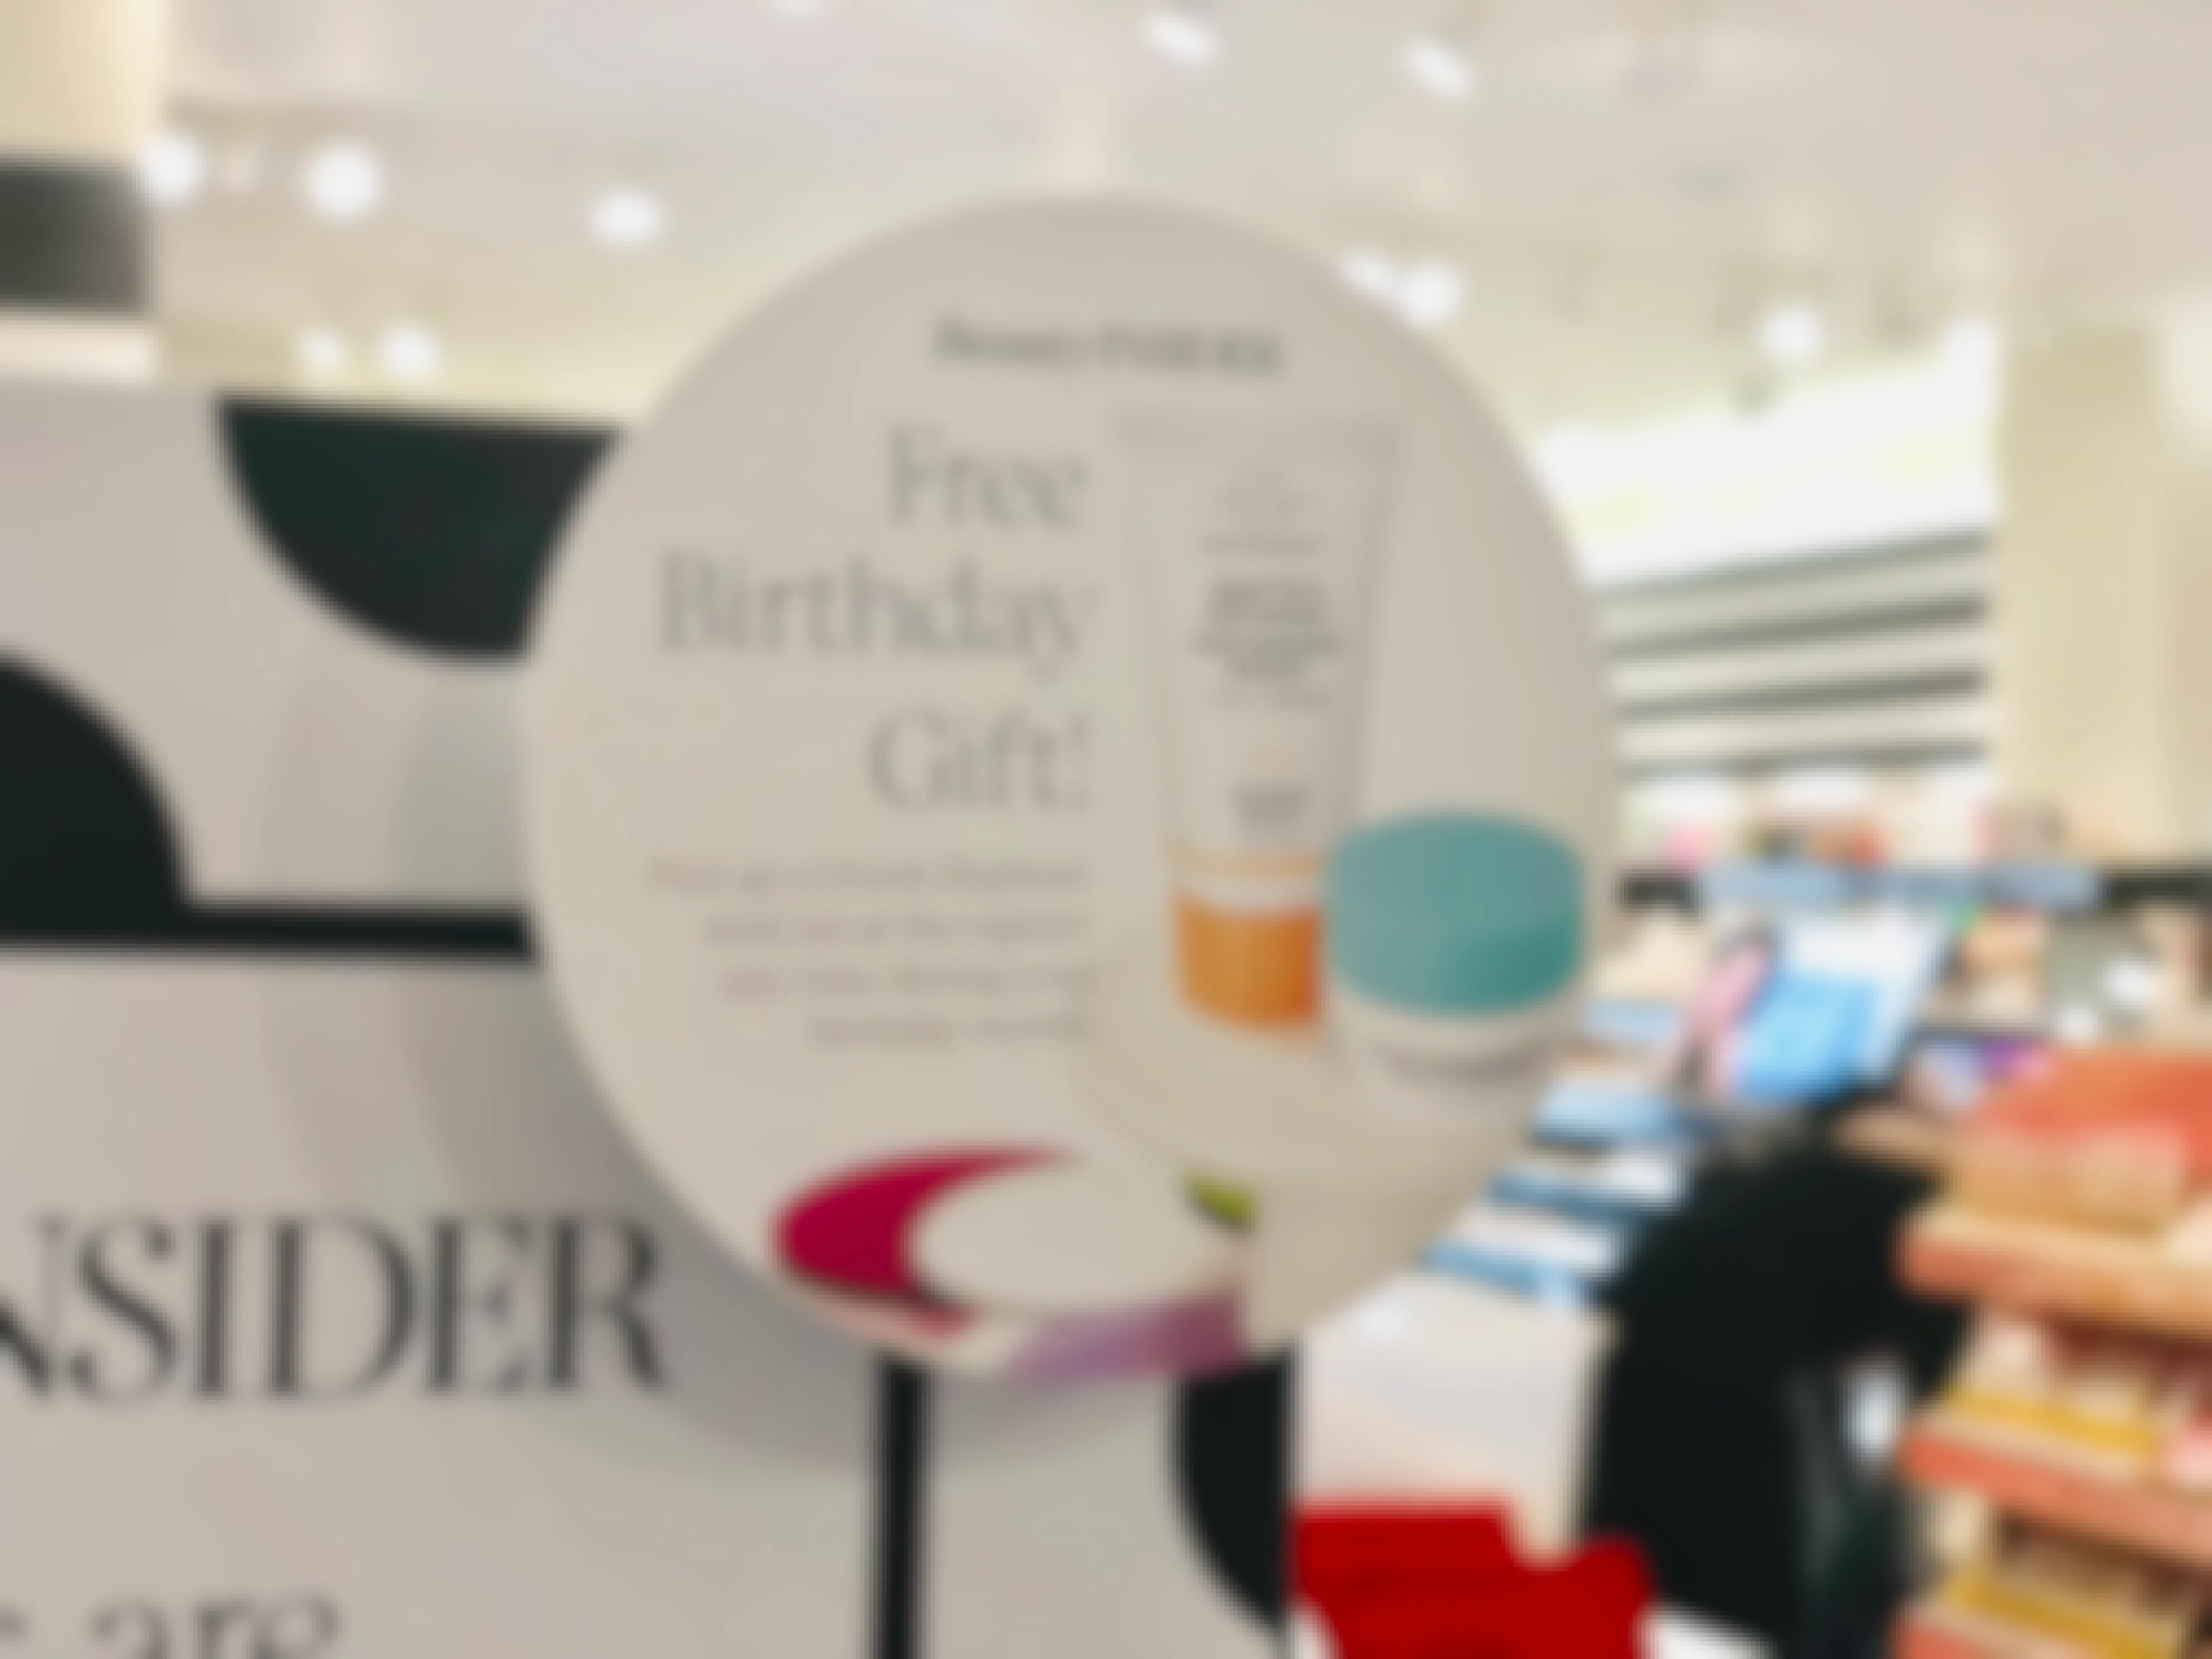 A free Sephora birthday gift sign